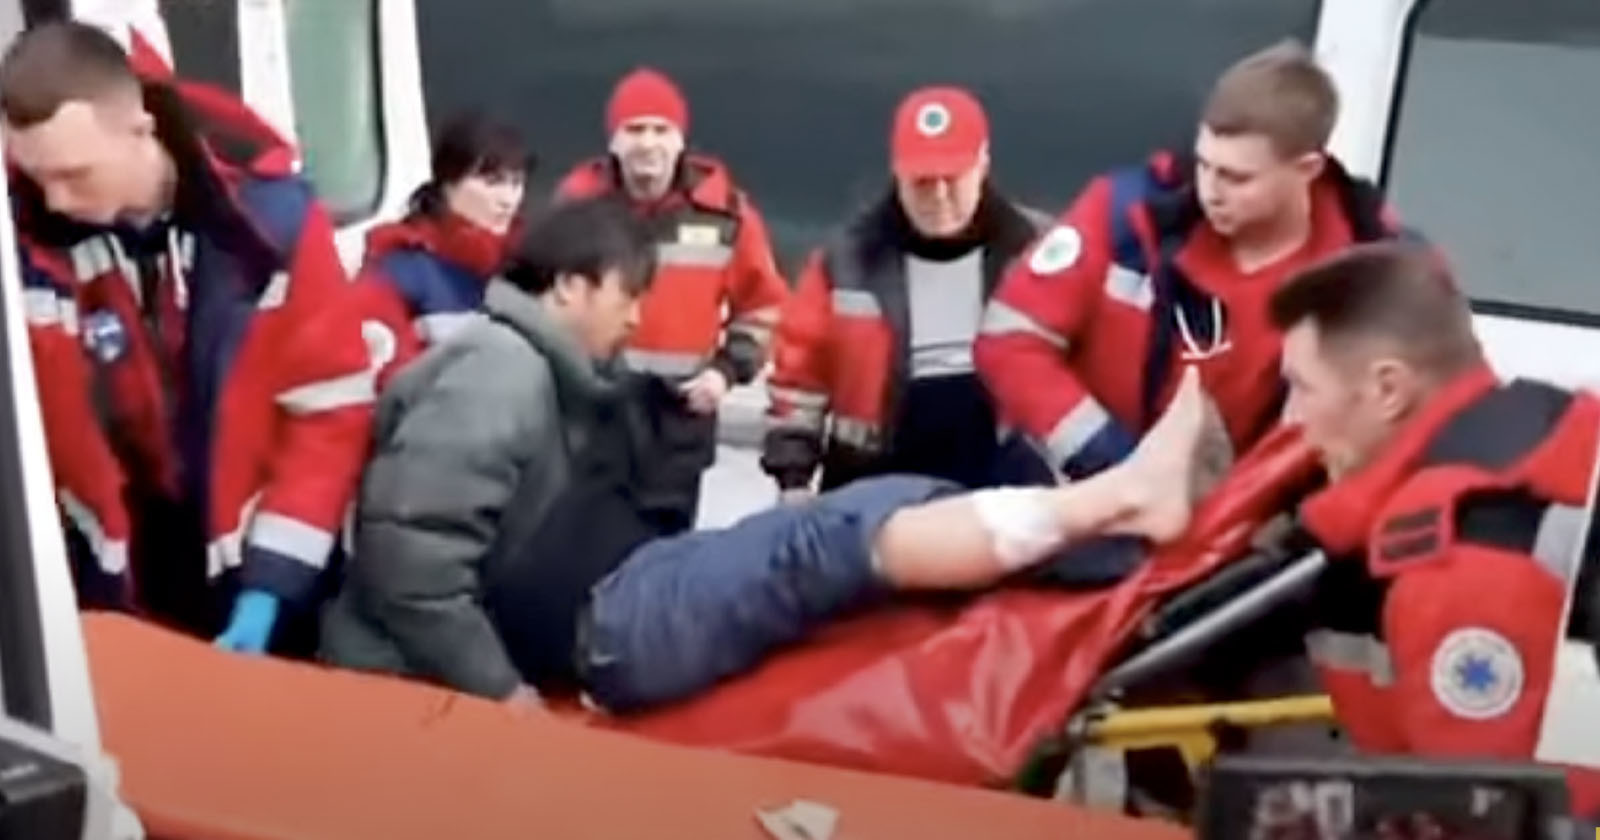 Japanese Photojournalist Injured in Ukraine During New Years Eve Attack